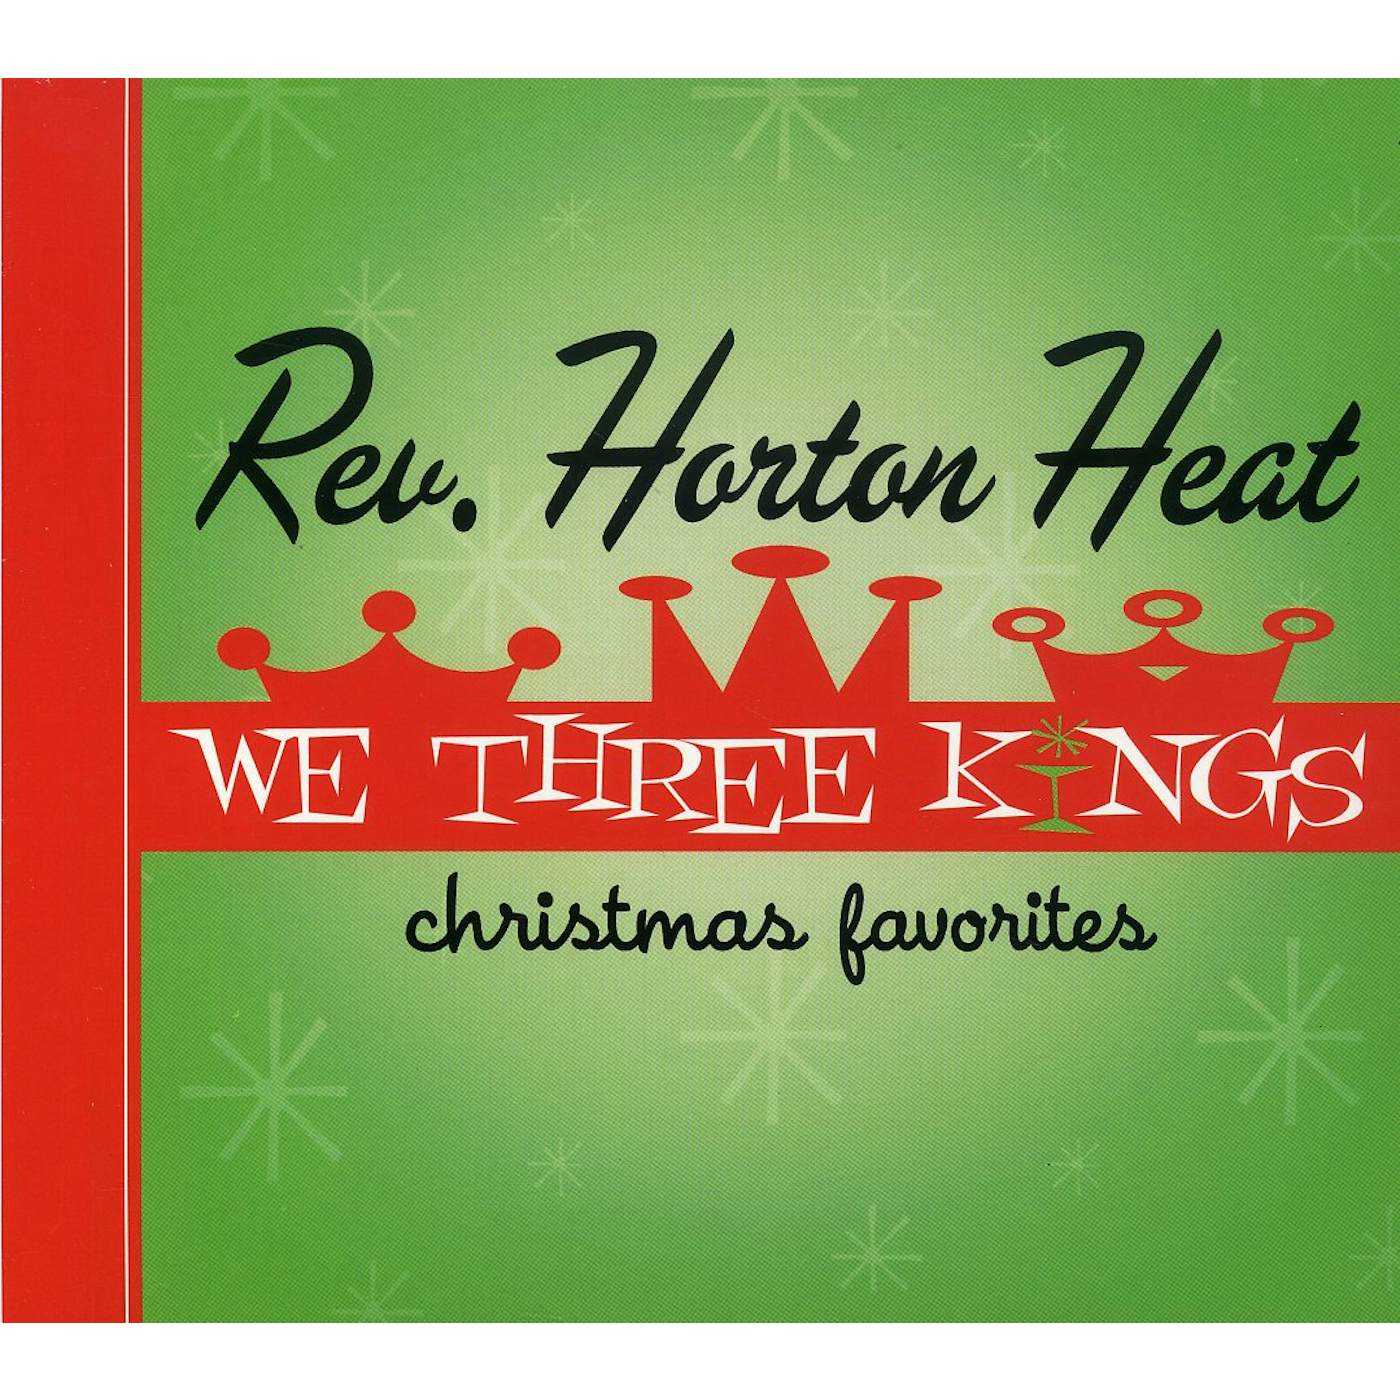 The Reverend Horton Heat WE THREE KINGS CD